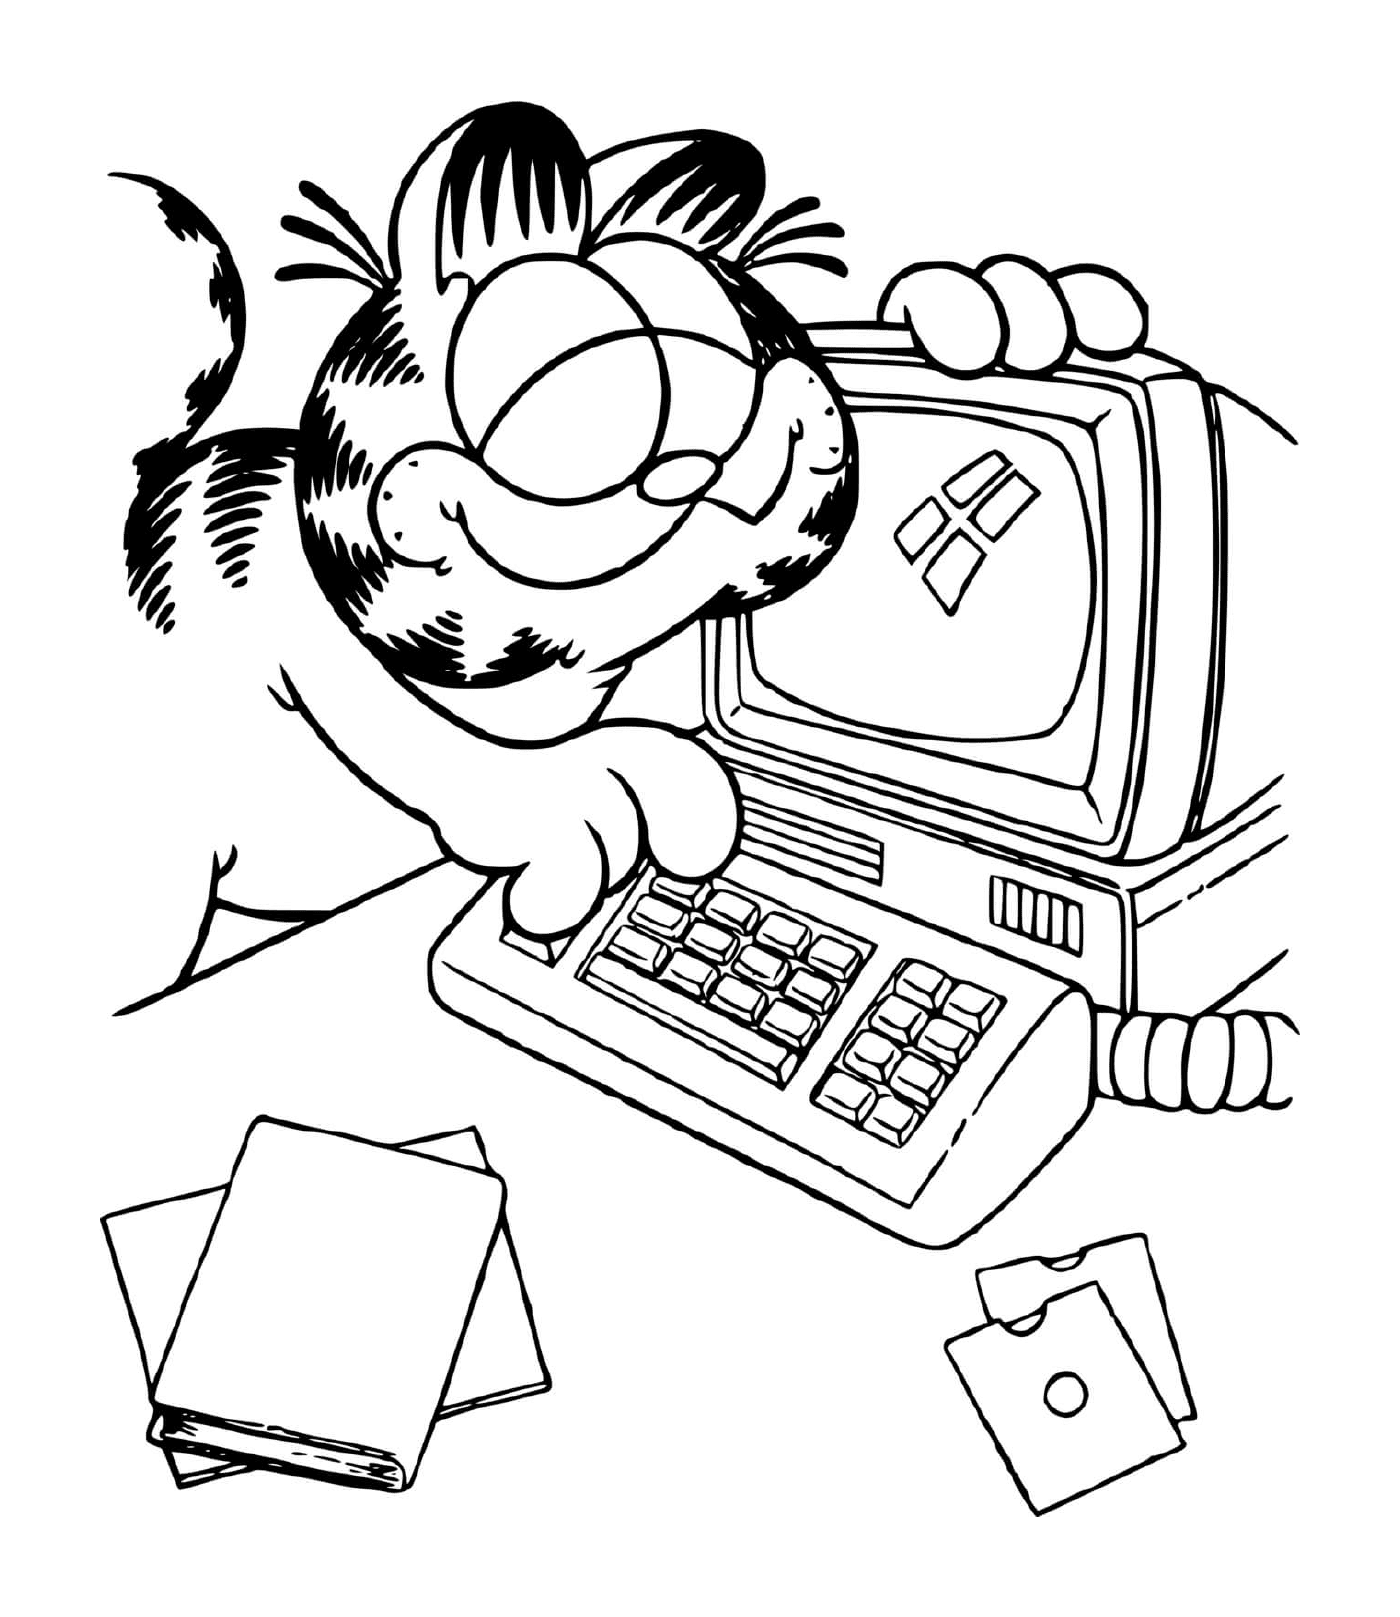  Garfield utiliza una computadora 